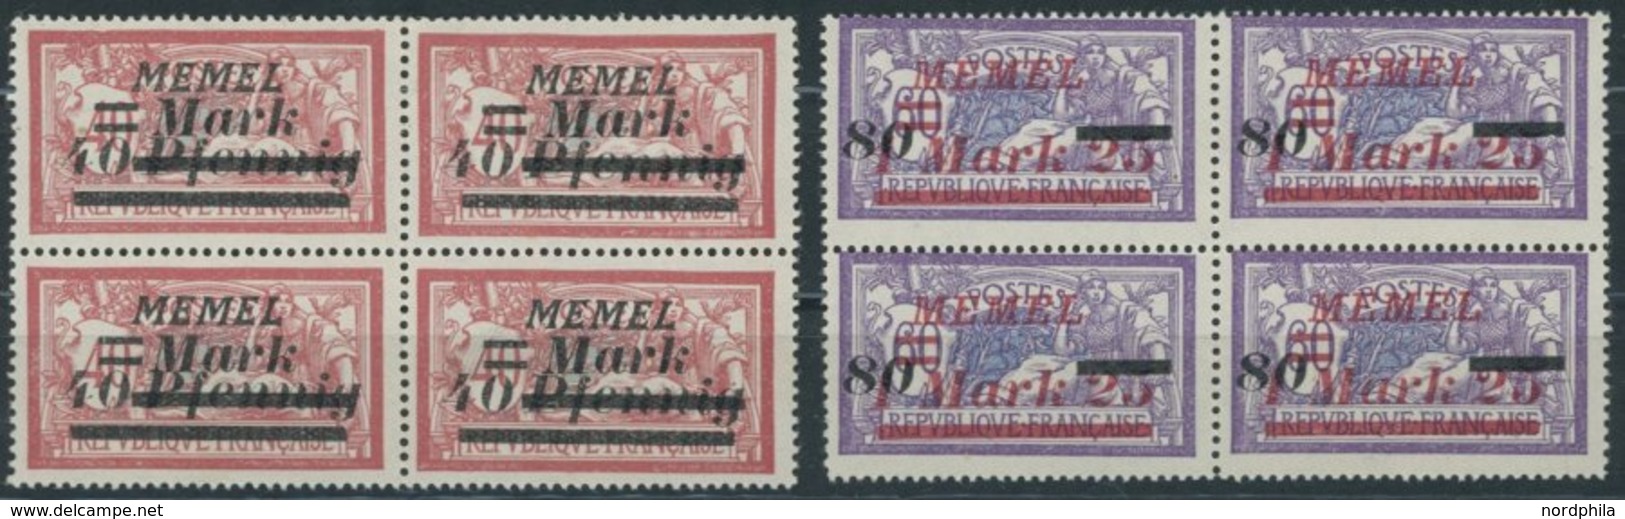 MEMELGEBIET 110-20 VB **, 1922, Staatsdruckerei Paris In Viererblocks, 2 Postfrische Prachtsätze, Mi. 336.- - Memel (Klaipeda) 1923